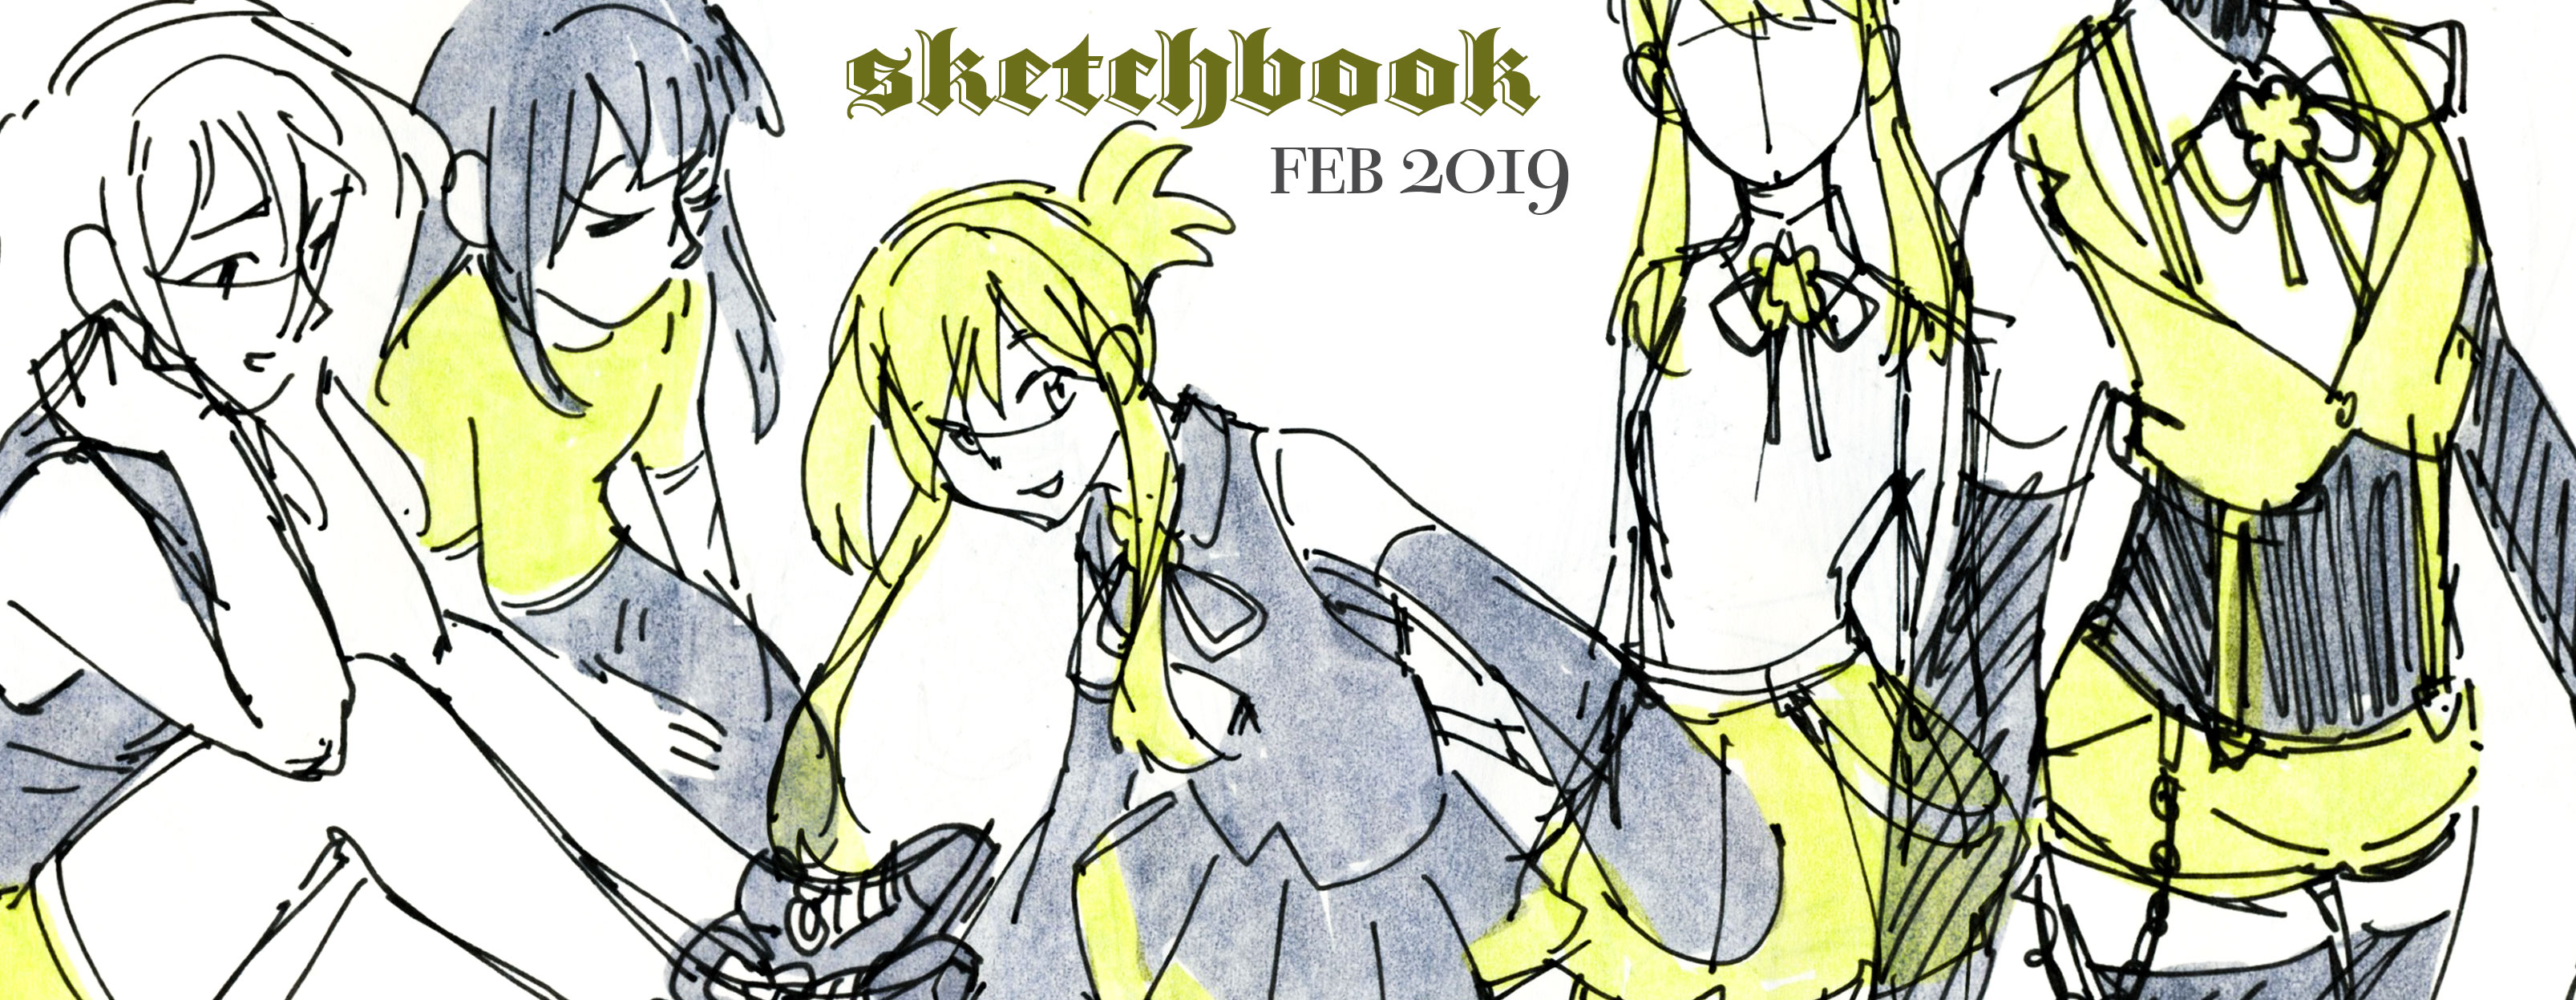 Sketchbook #7